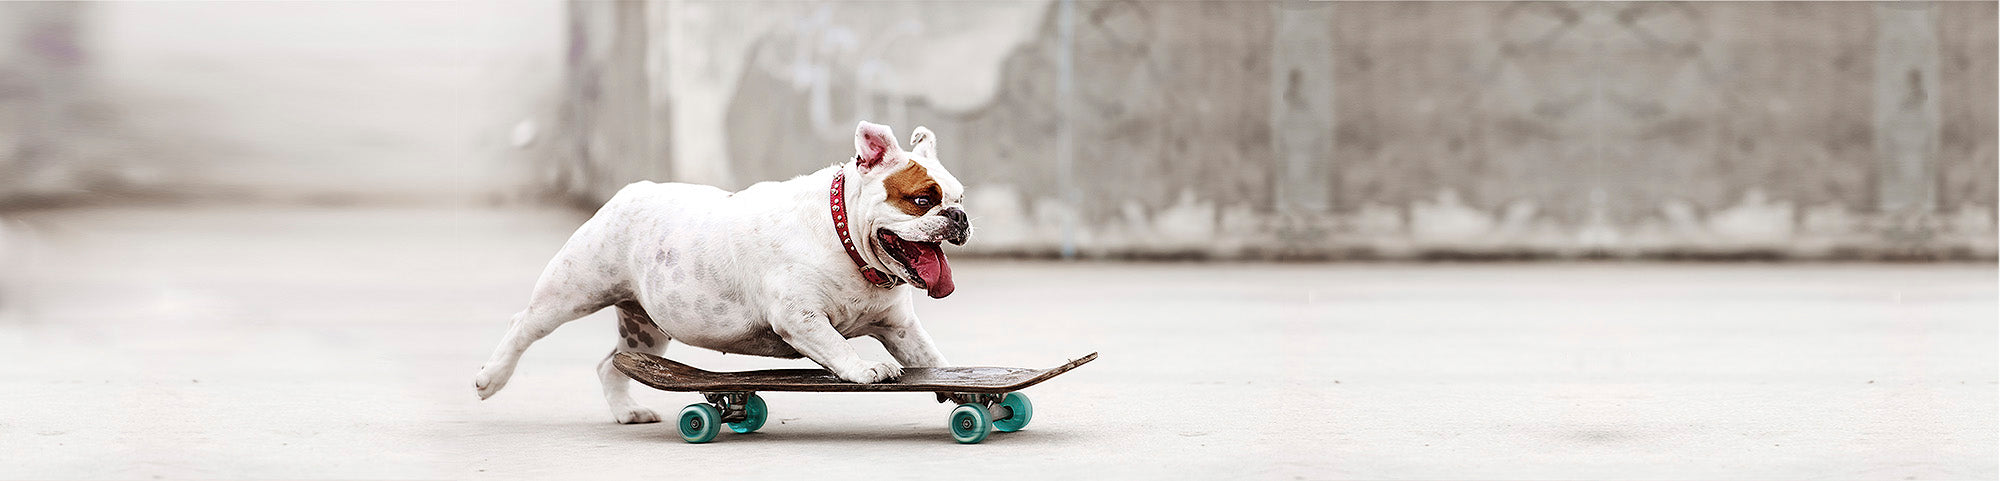 dog on skateboard